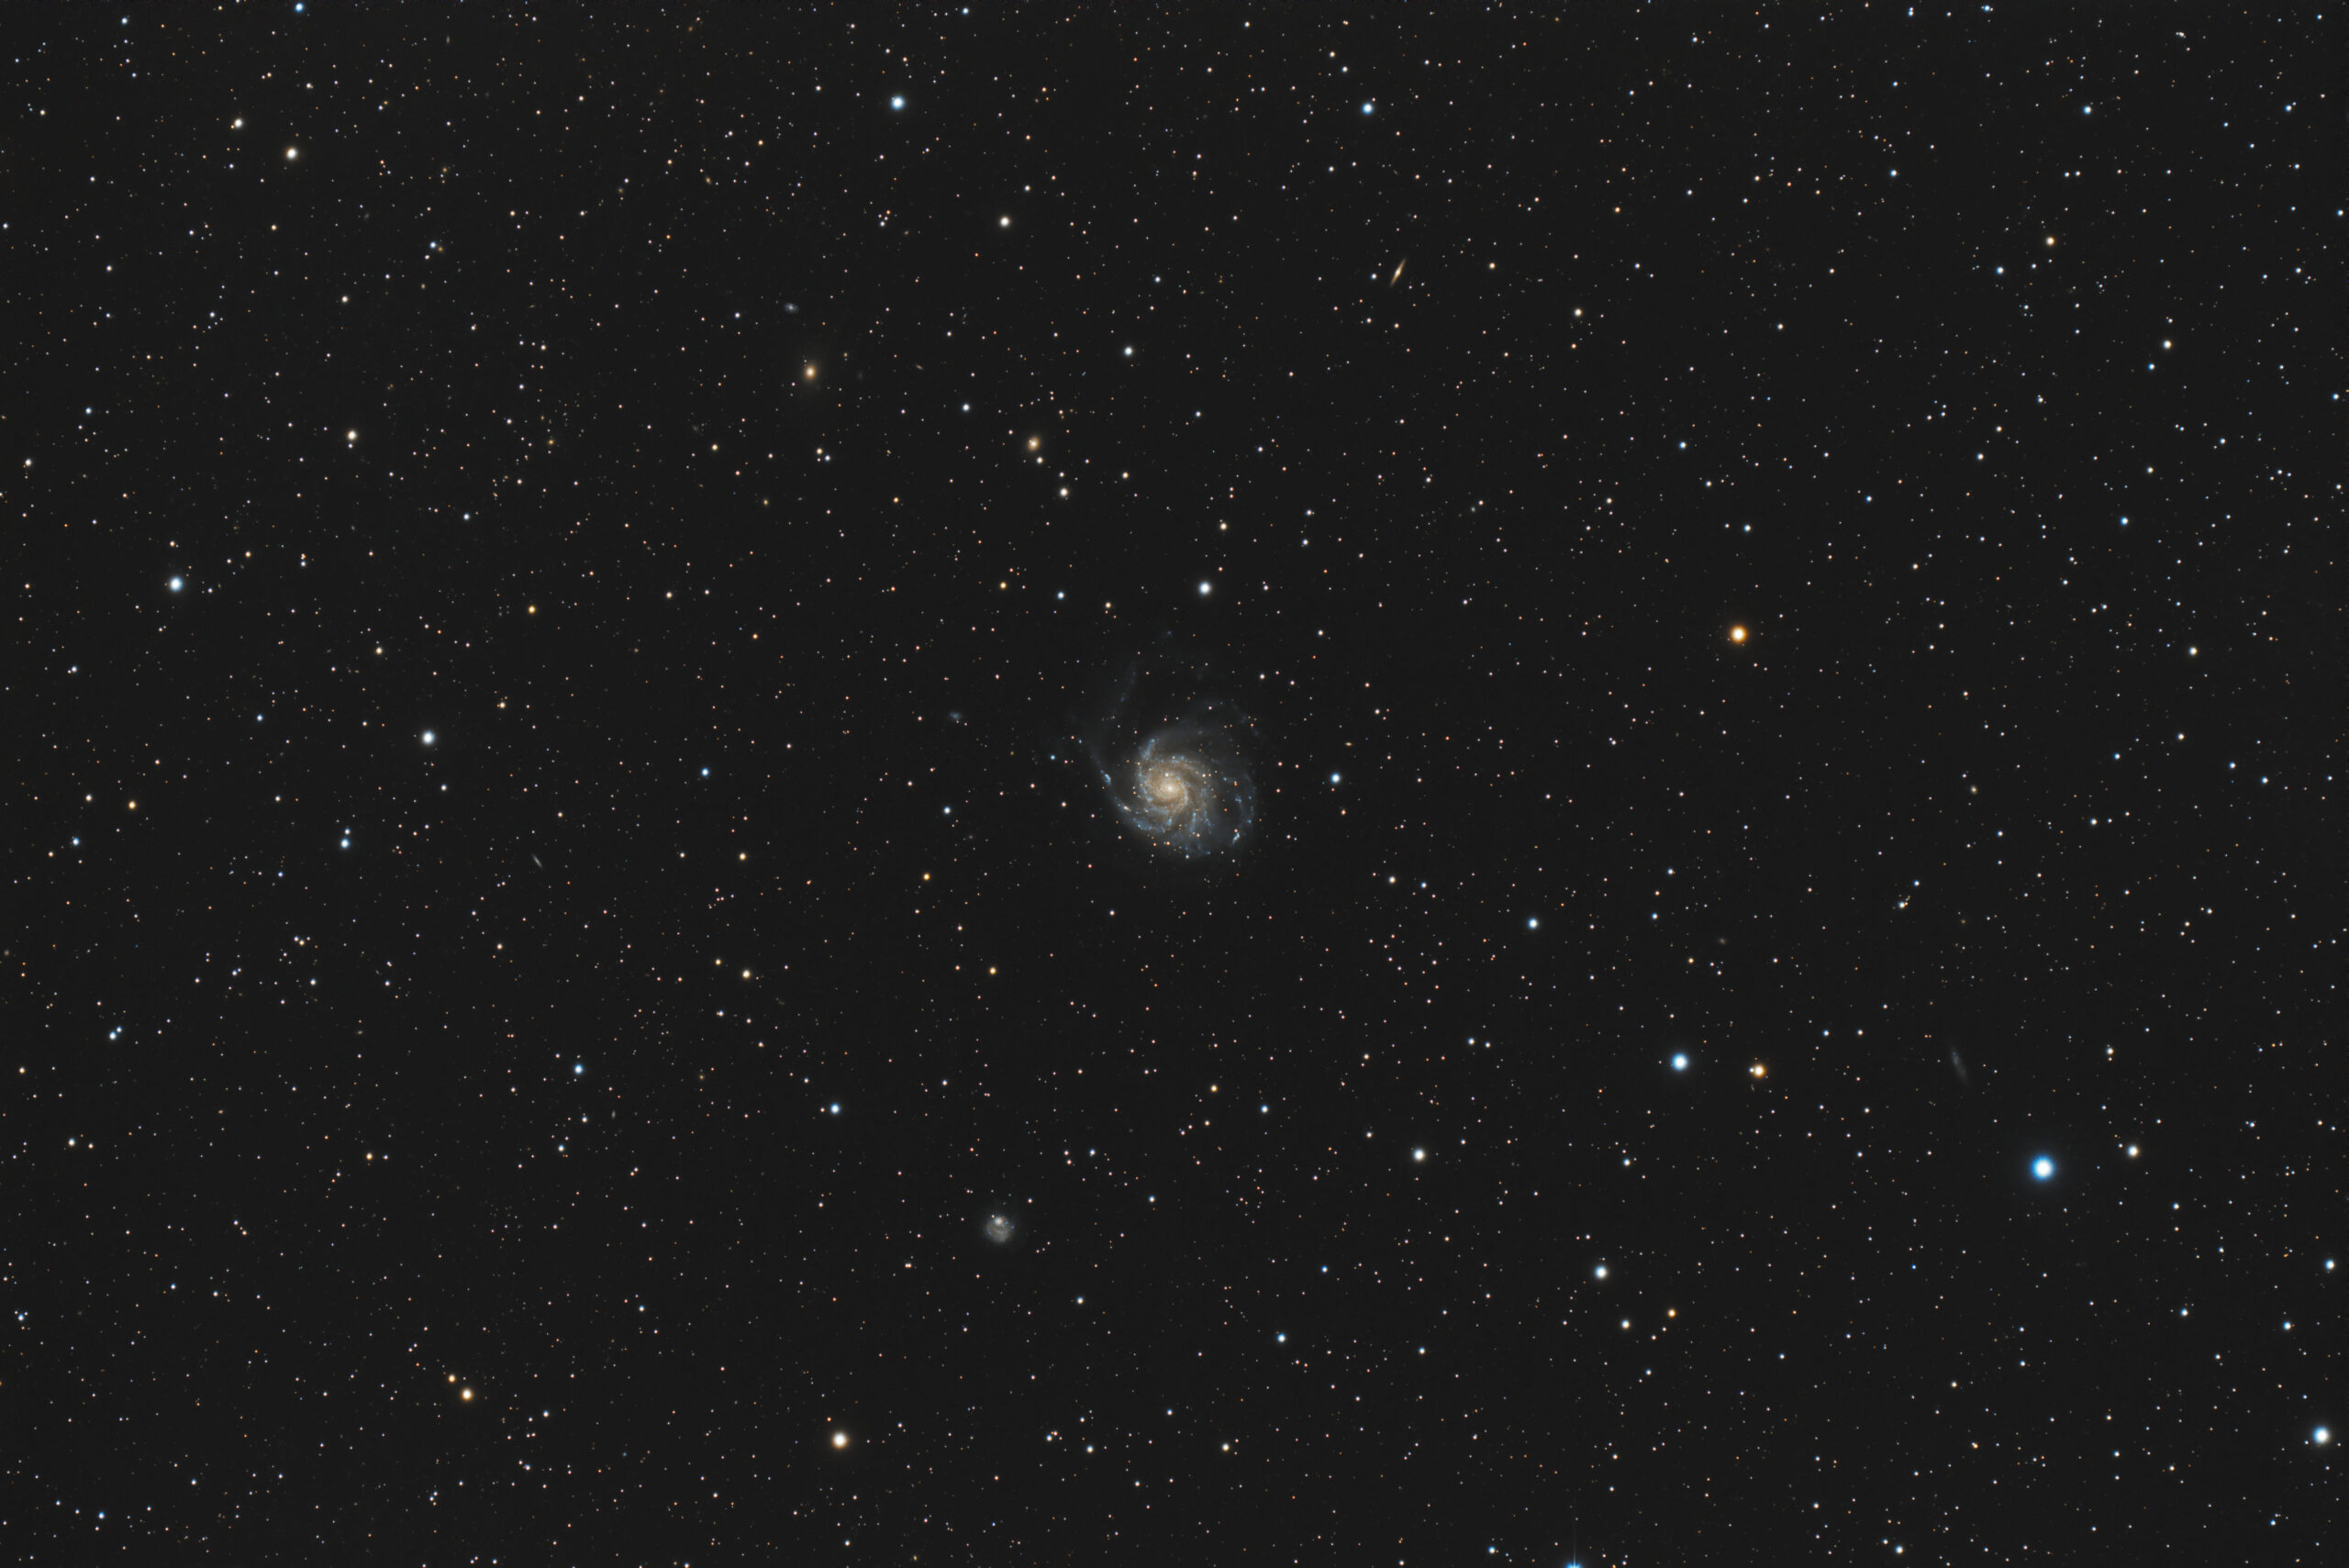 M101 Feuerrad Galaxie